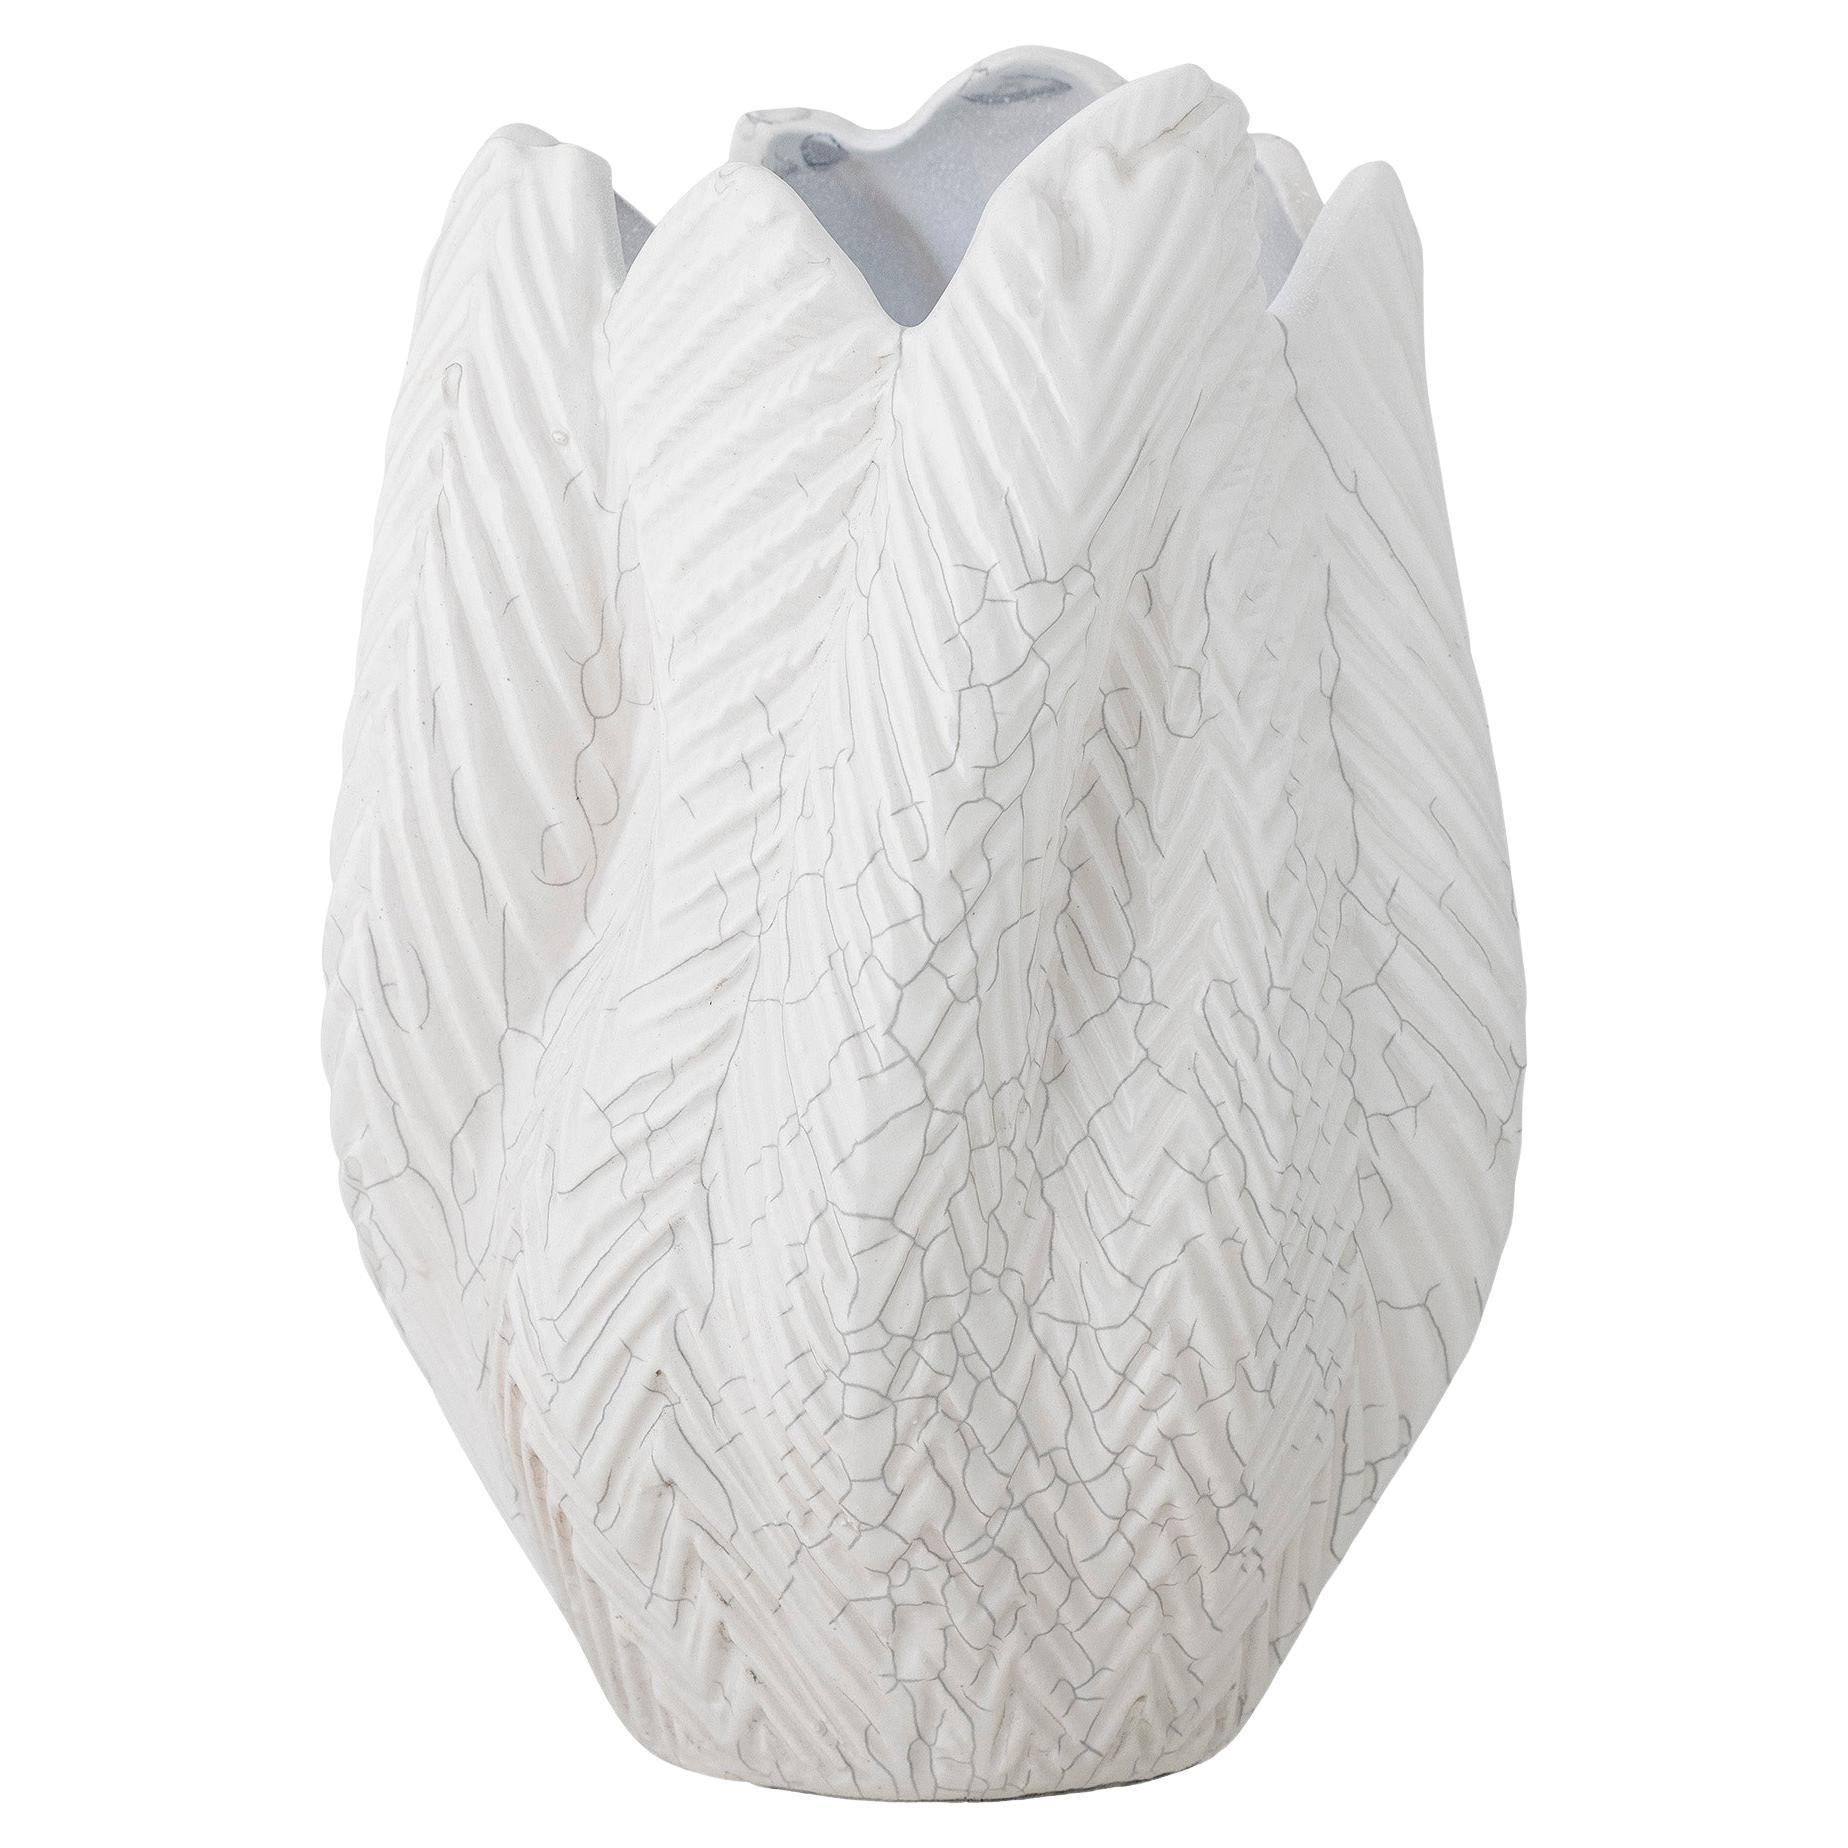 21st Century Handcrafted White Enamelled Sandstone Decorative Vase